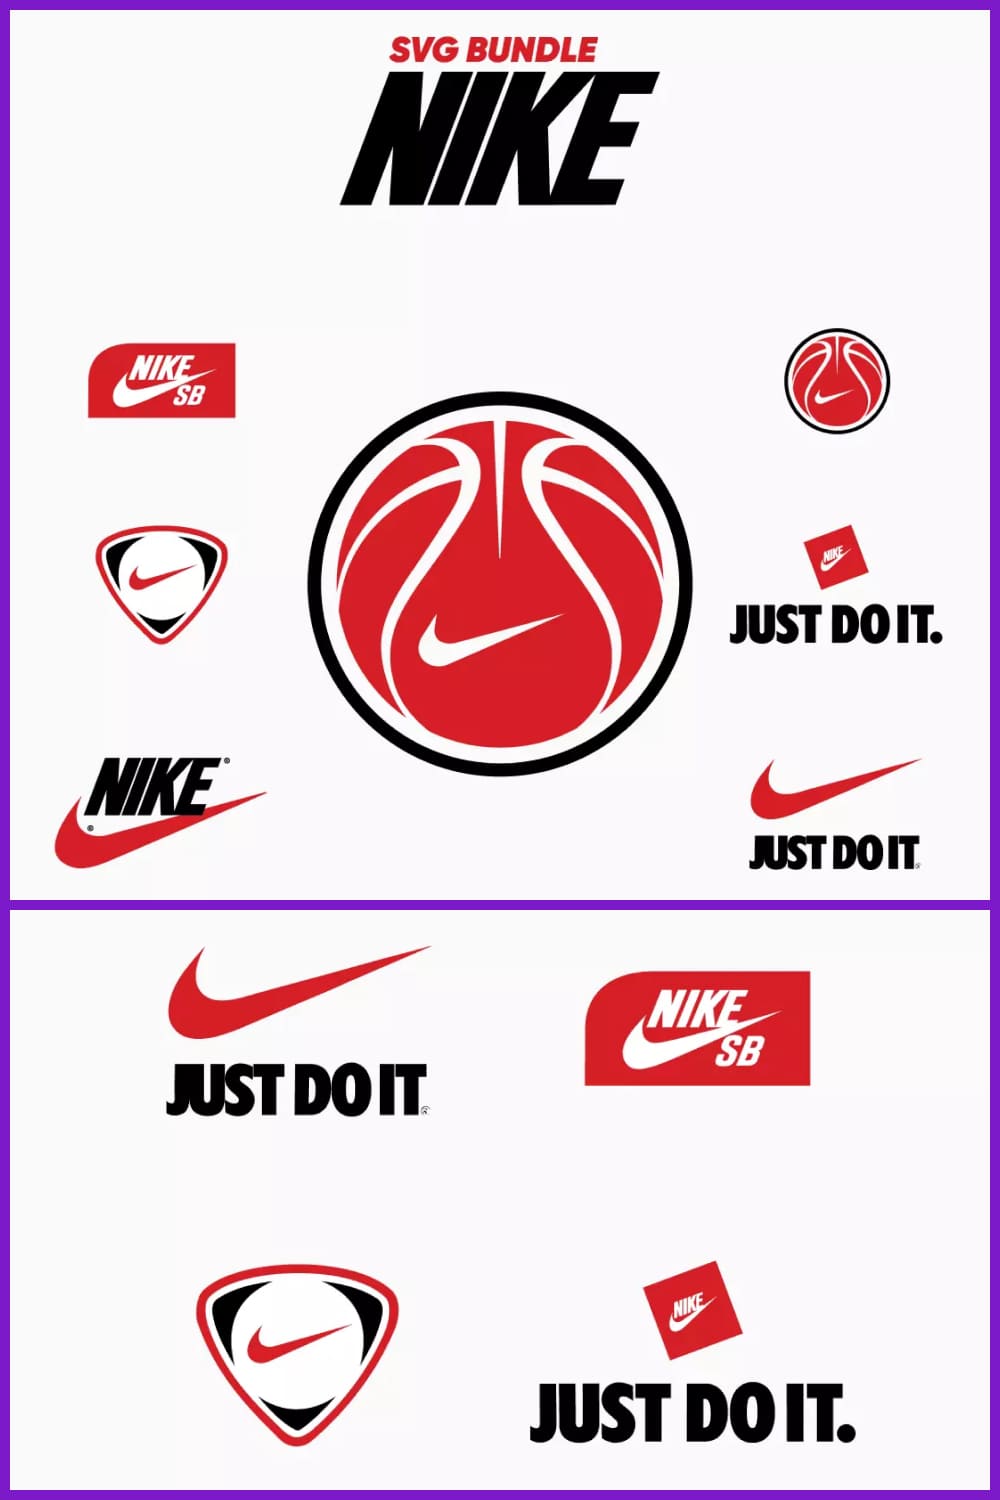 Nike logos and balls.